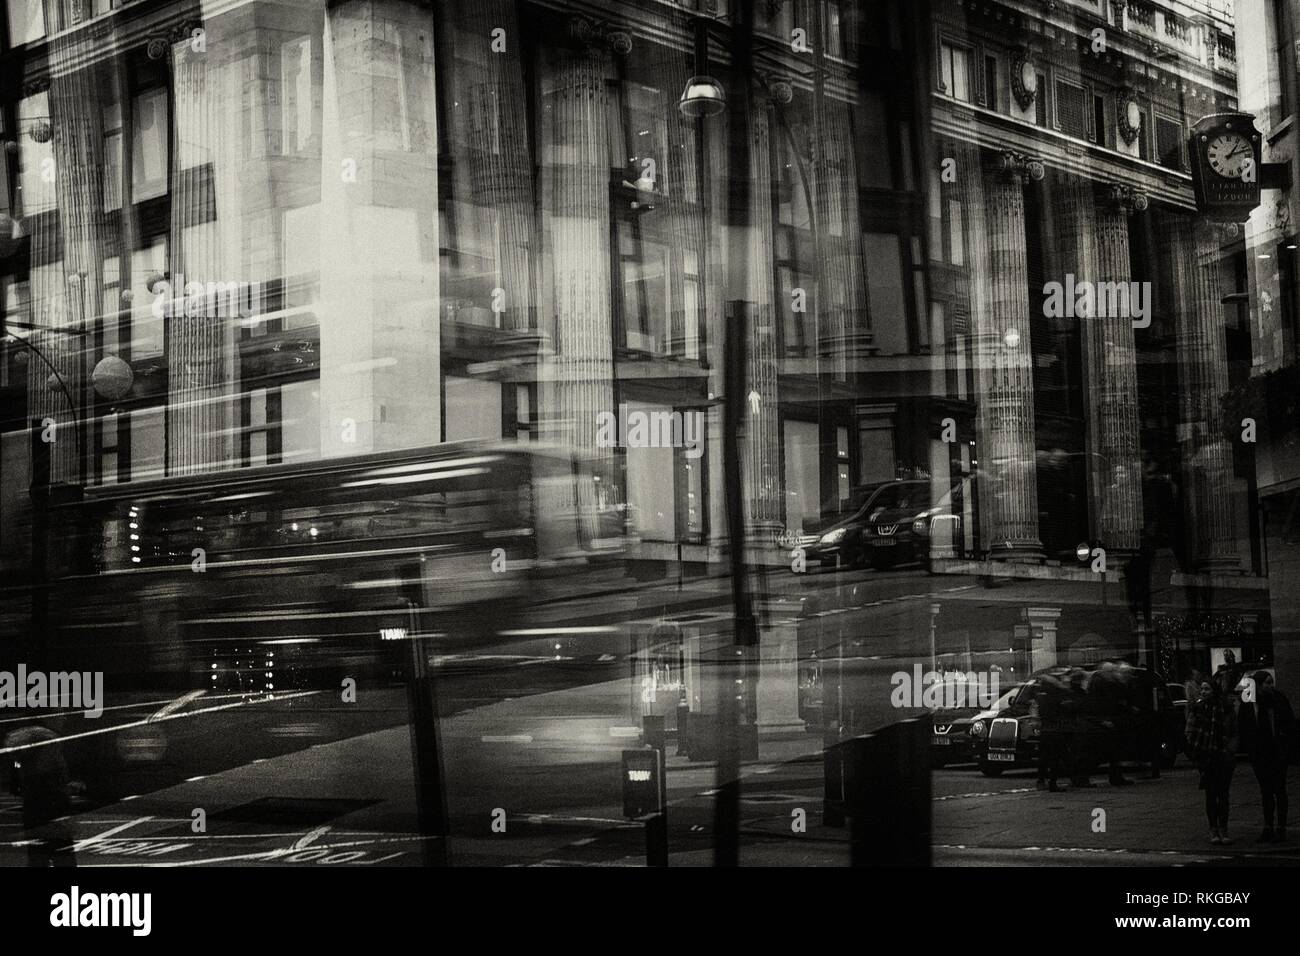 Scena di strada di Oxford Street tra traffico, bus, taxi, persone. Londra, Inghilterra. Foto Stock